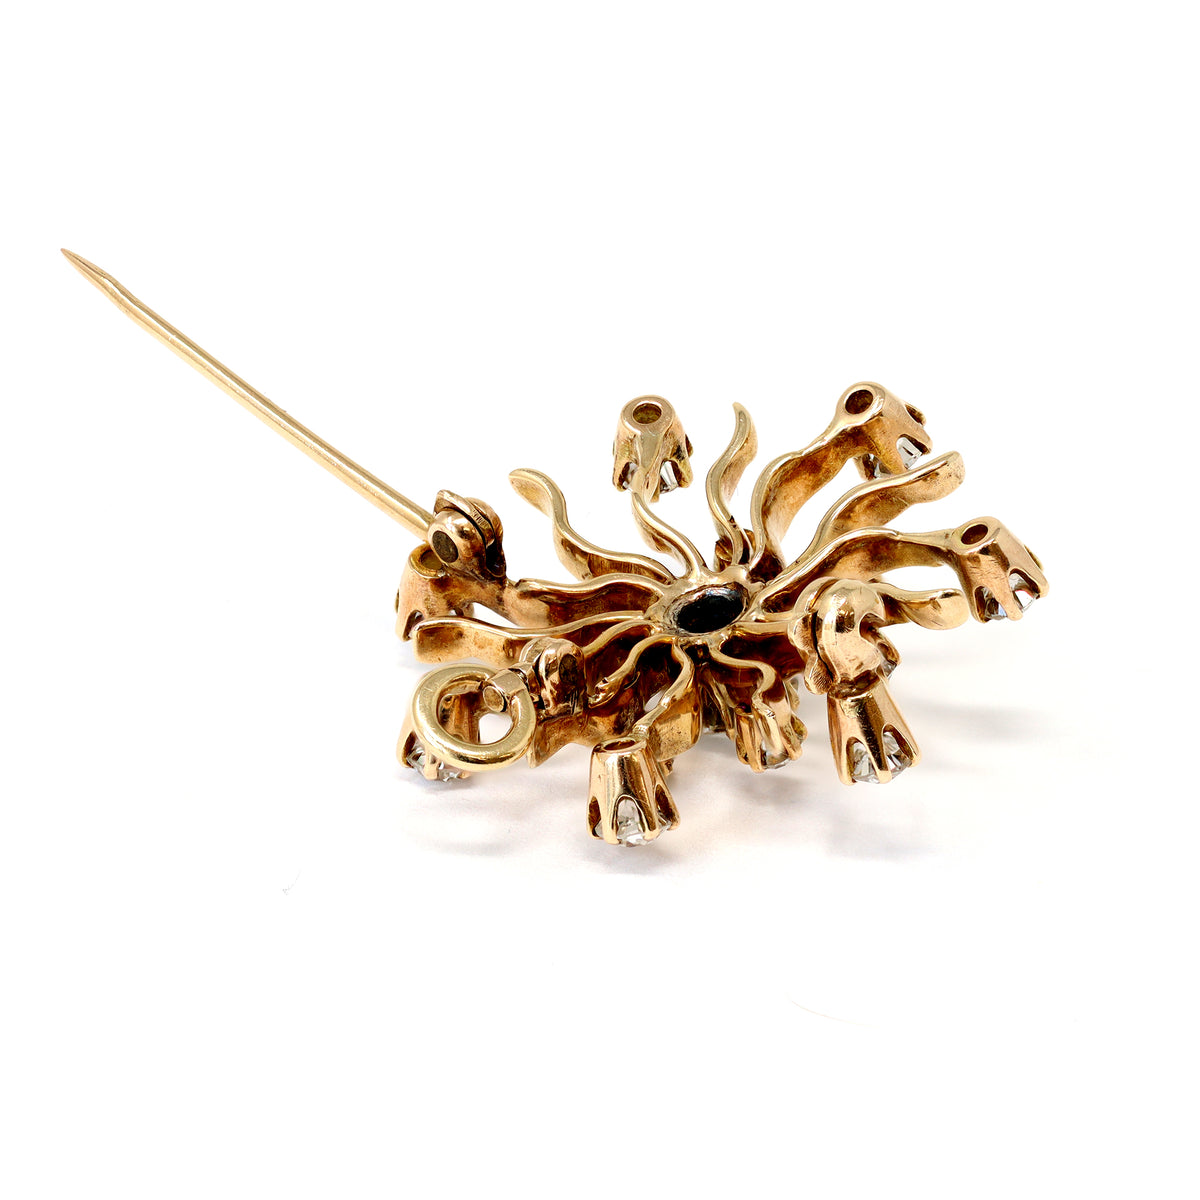 Victorian-diamond-starburst-brooch-and-pendant-set-in-14-karat-yellow-gold-bail-view-2000x2000